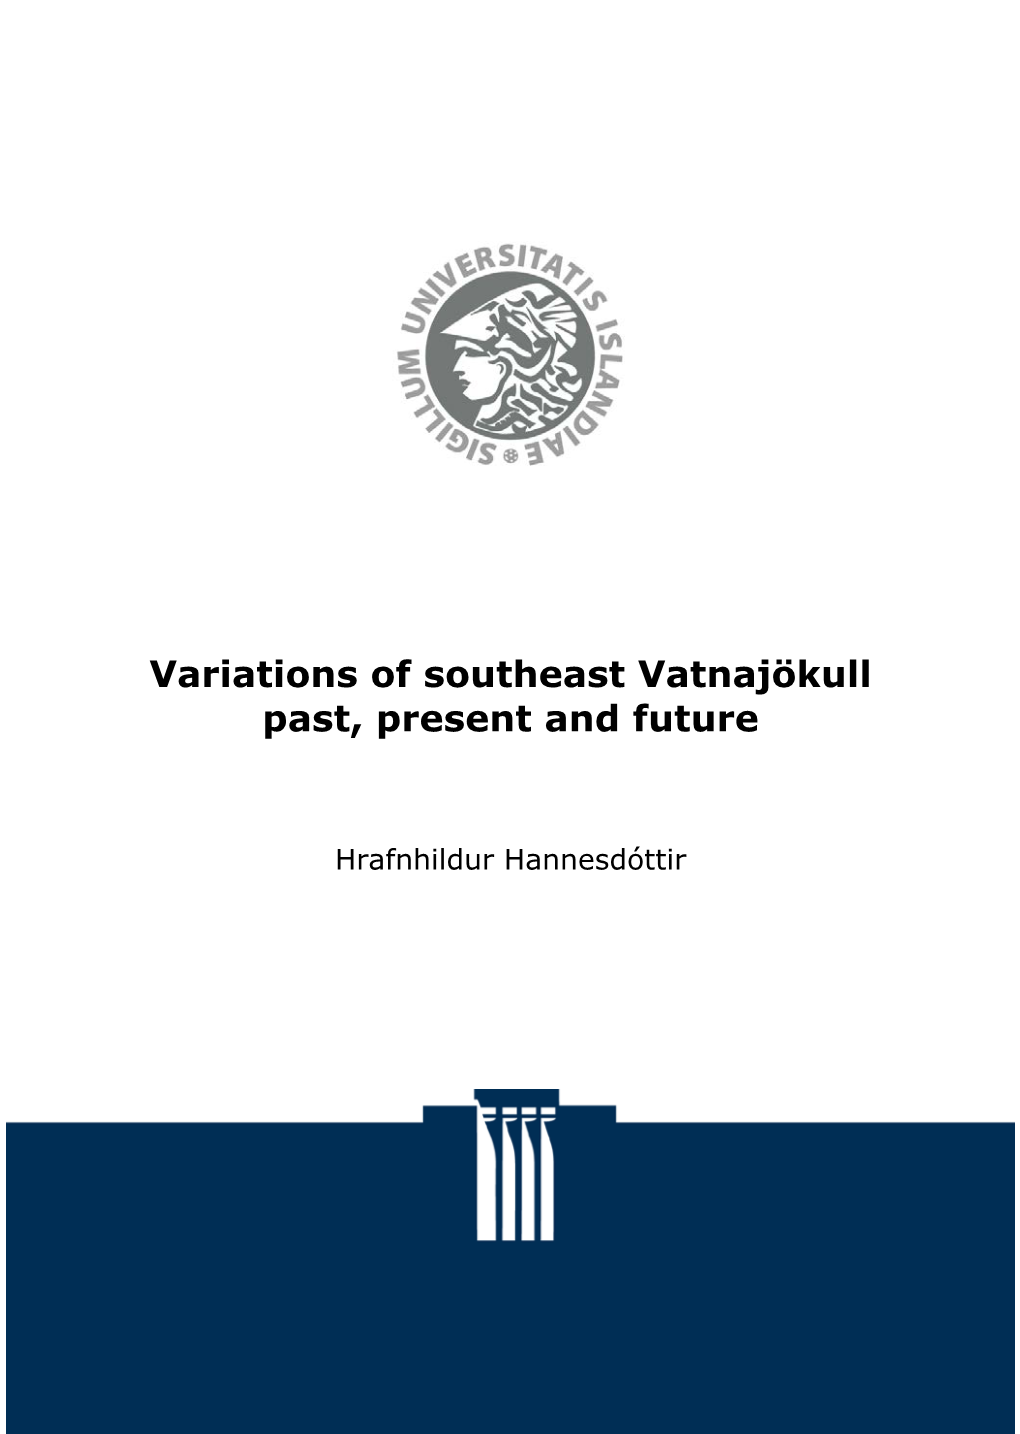 Variations of Southeast Vatnajökull Past, Present and Future